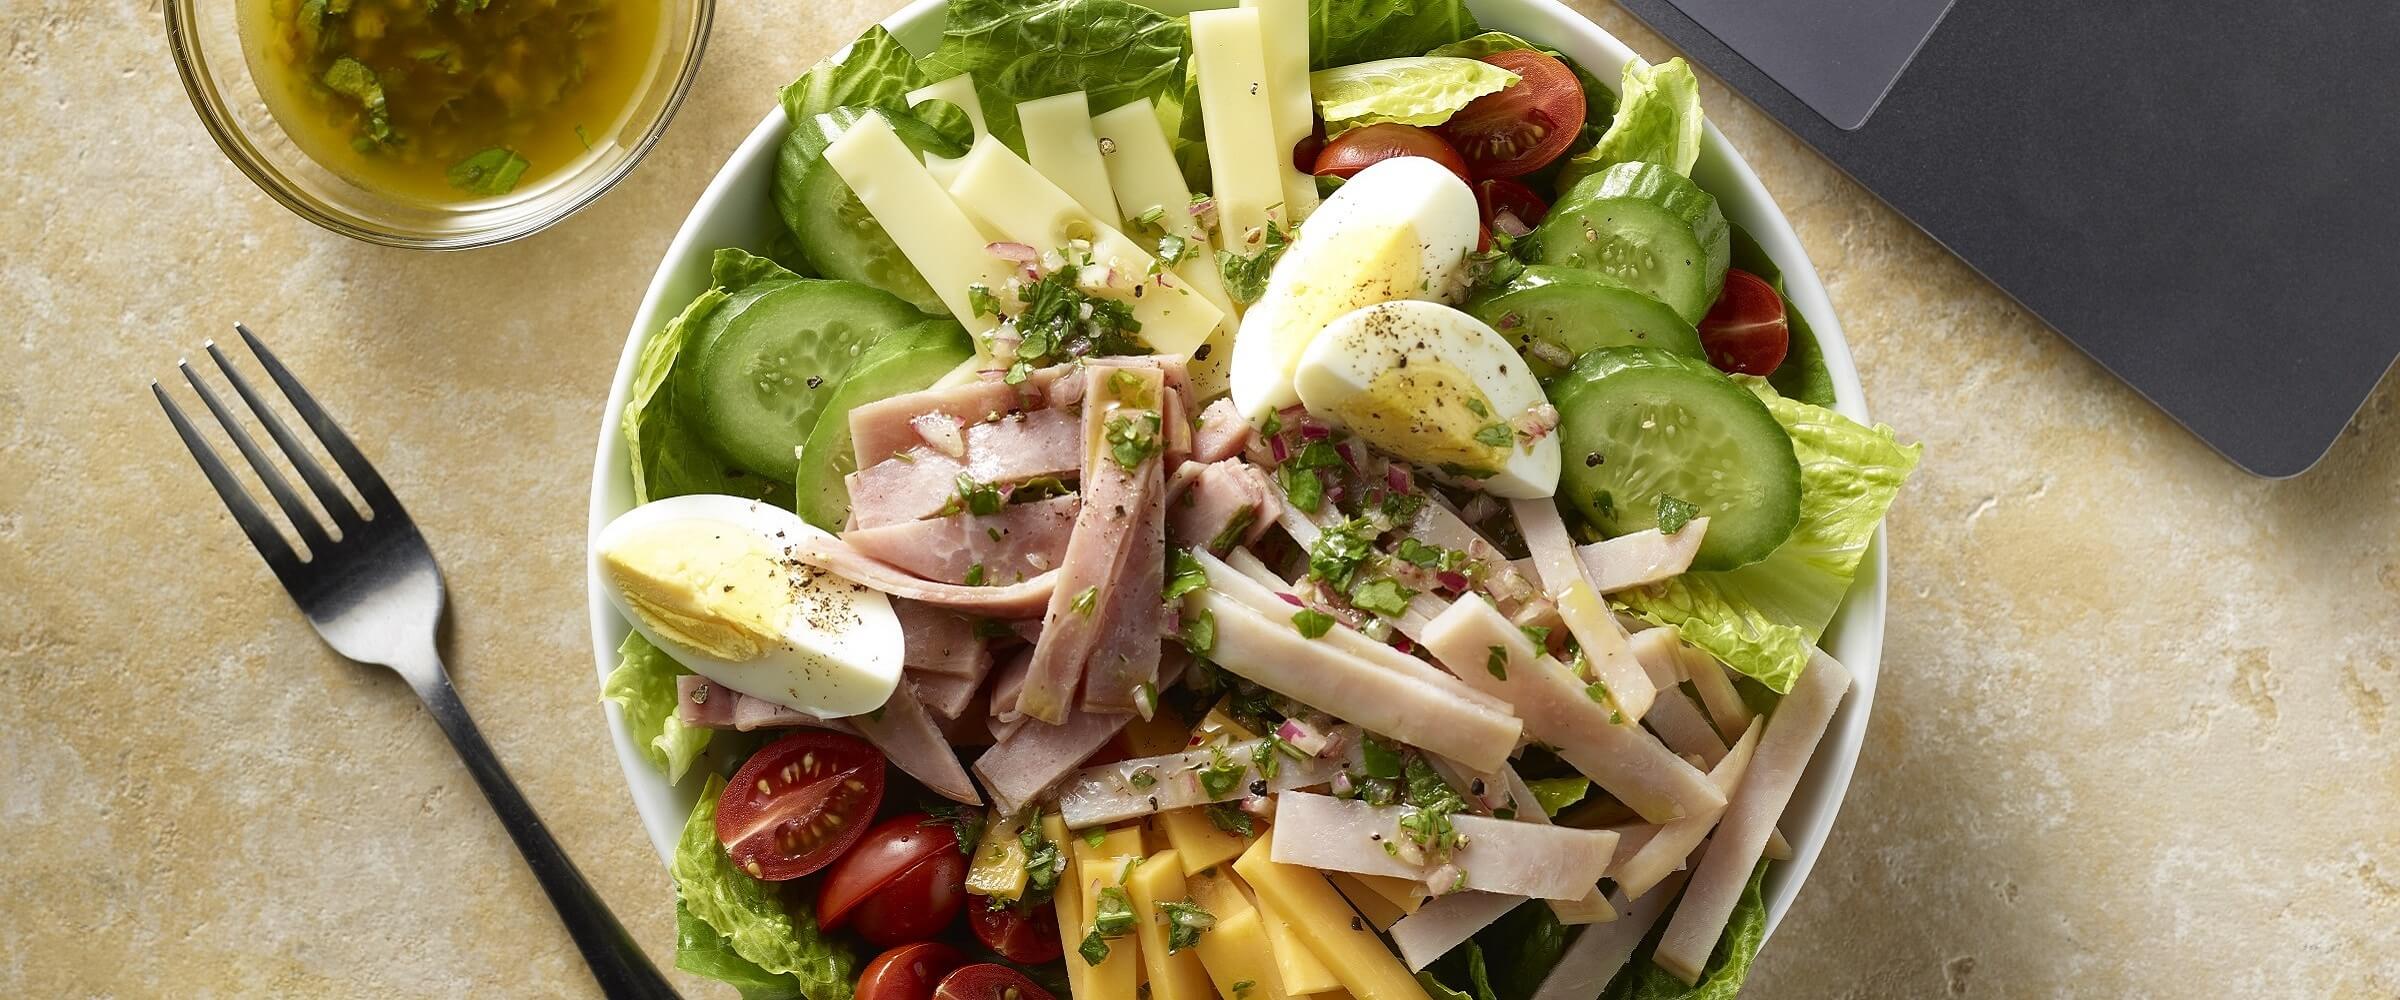 https://www.hormel.com/brands/hormel-natural-choice-meats/wp-content/uploads/sites/9/Natural_Choice_Chef_Salad.jpg